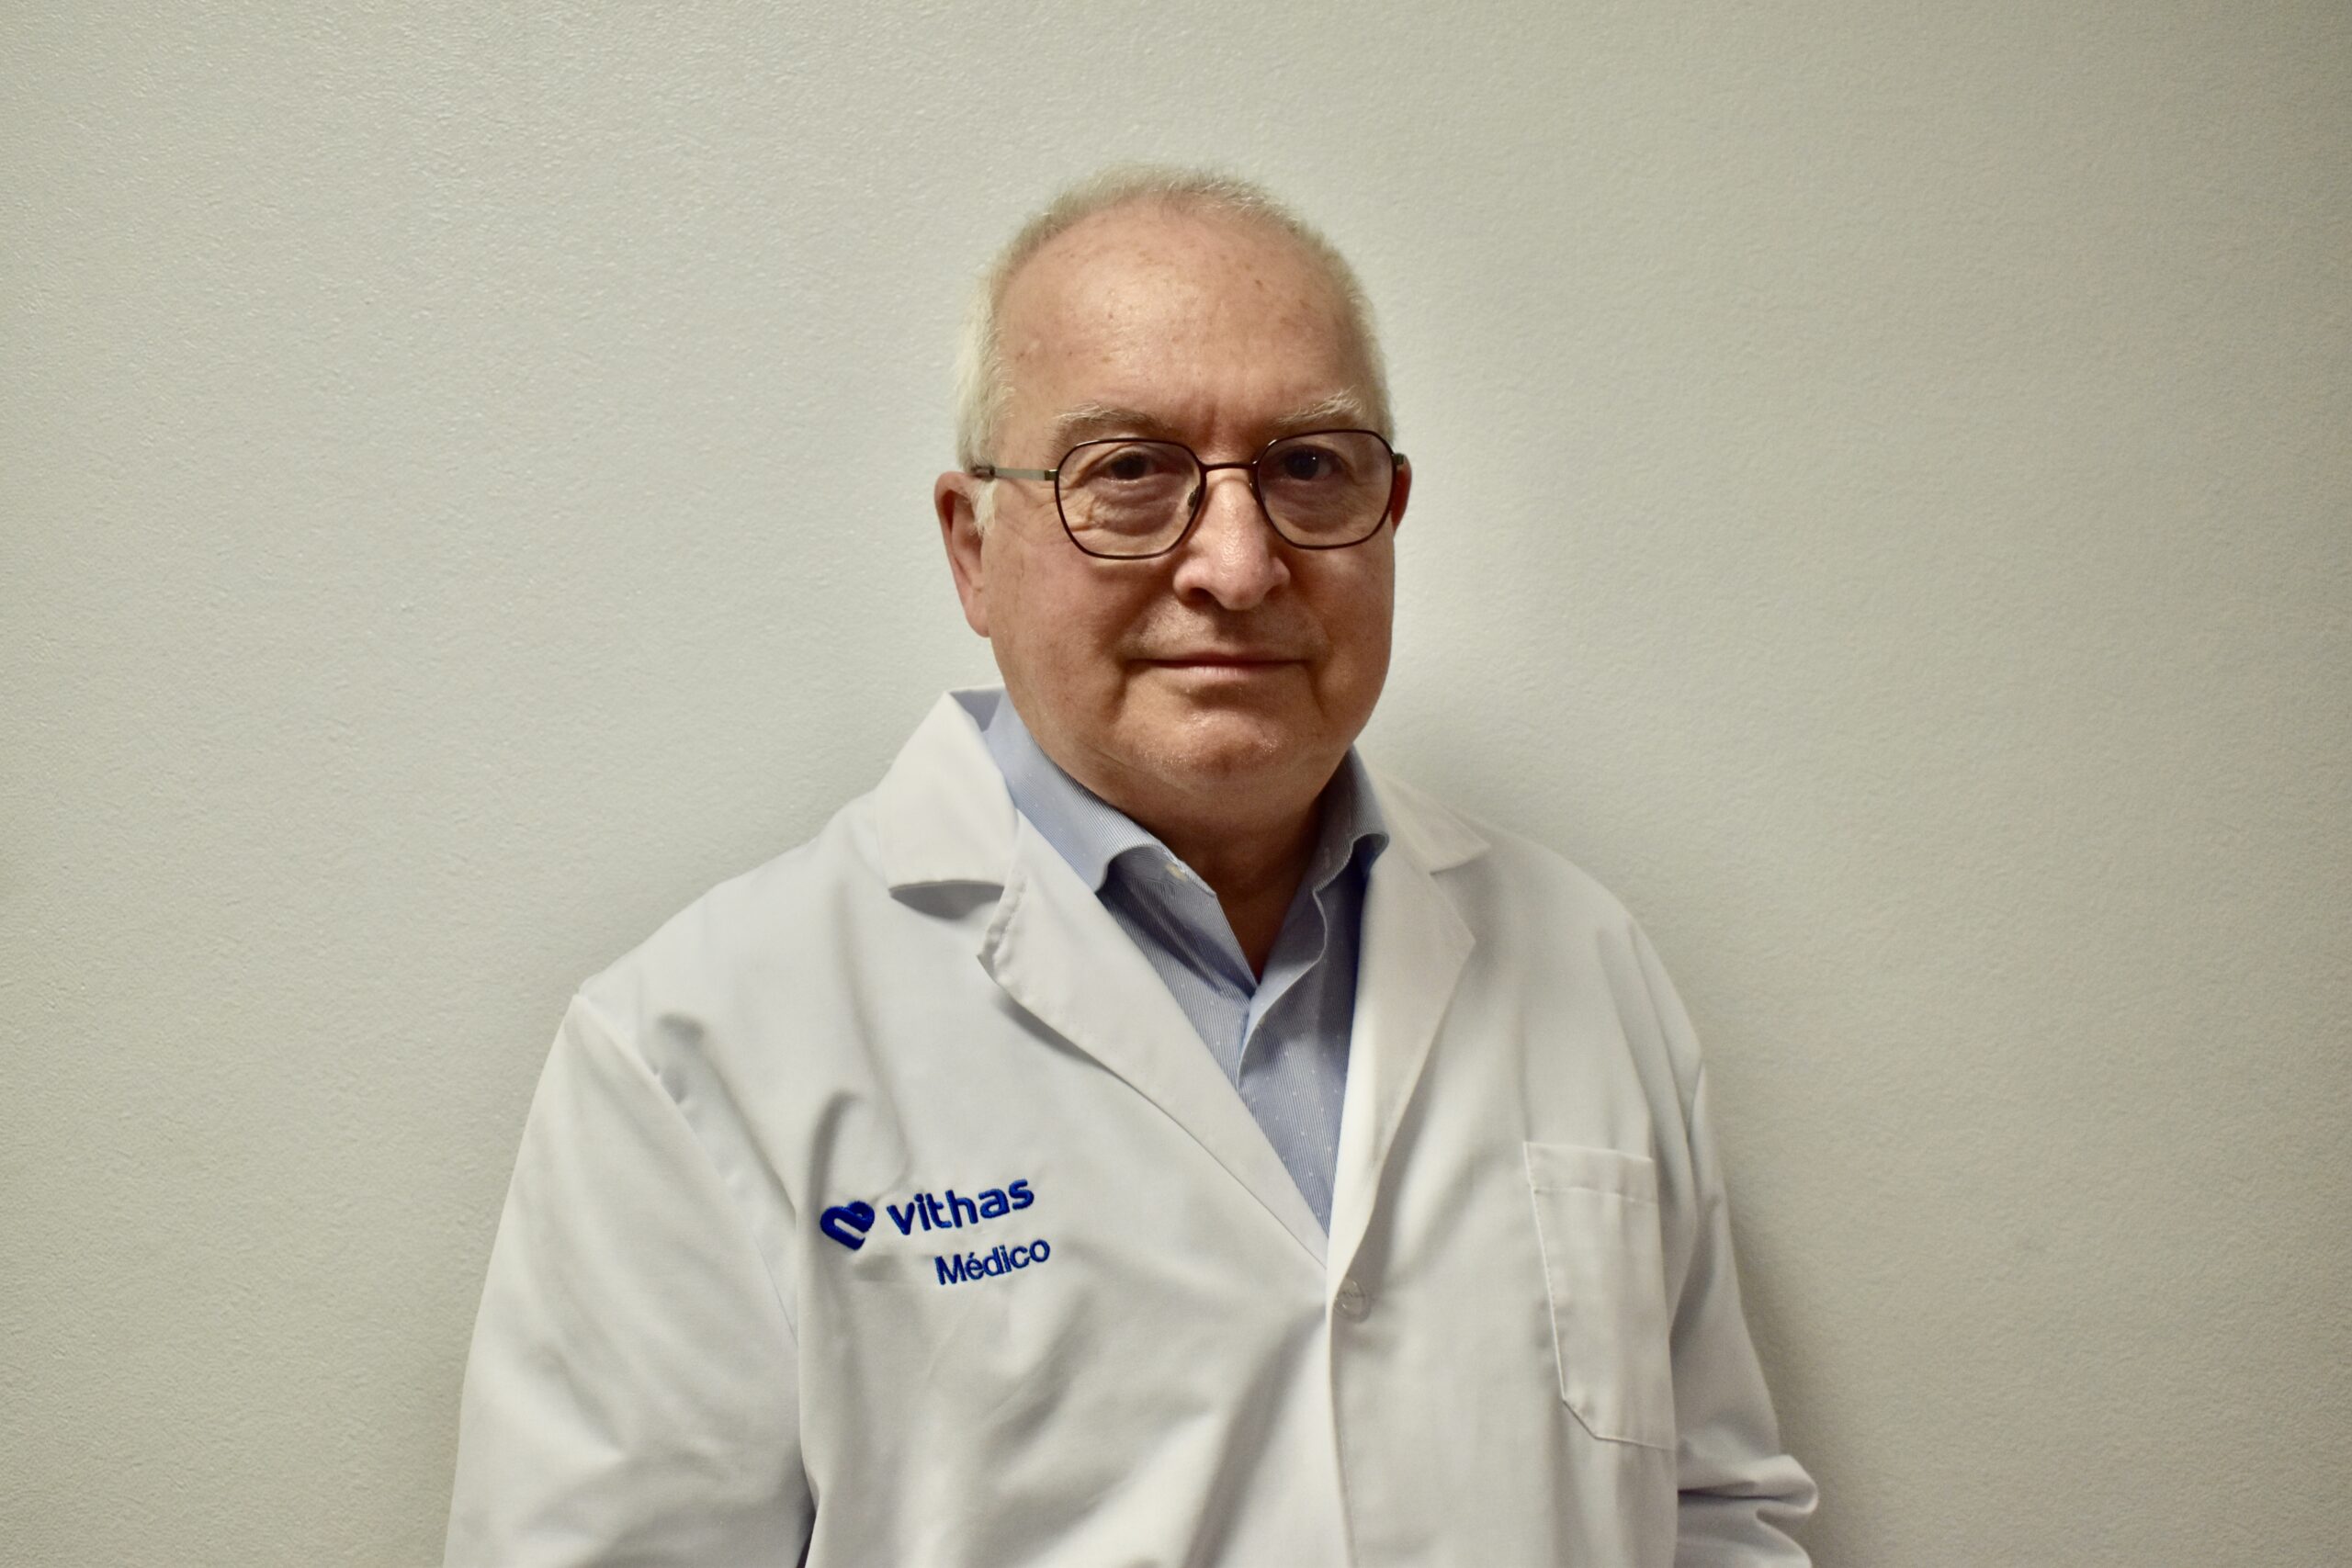 Dr. Jose Cervera Deval